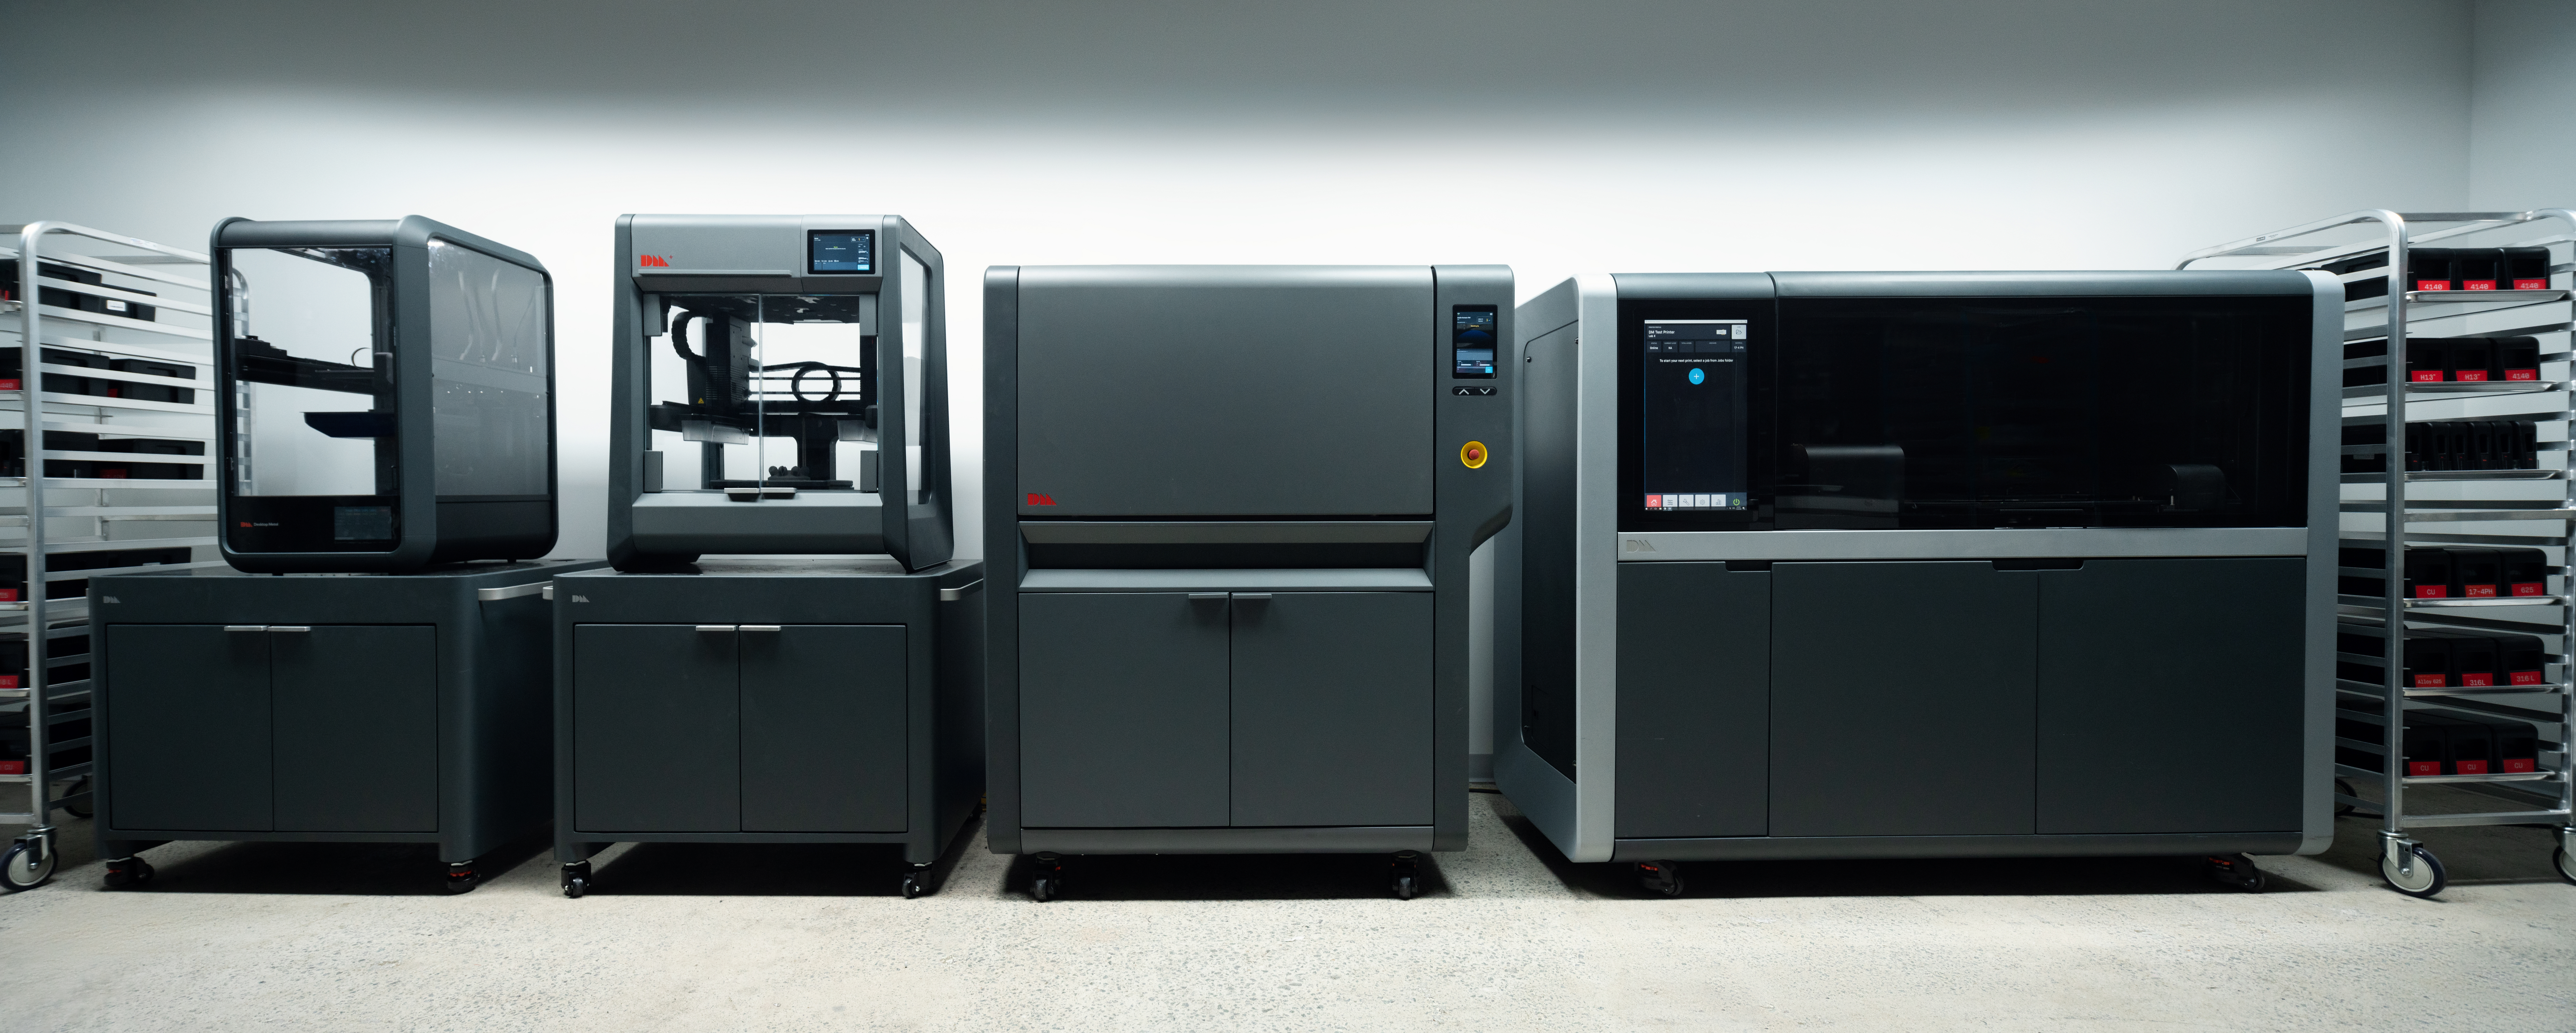 Desktop Metal Fiber printer, Studio System 2, and Shop System in machine shop setting